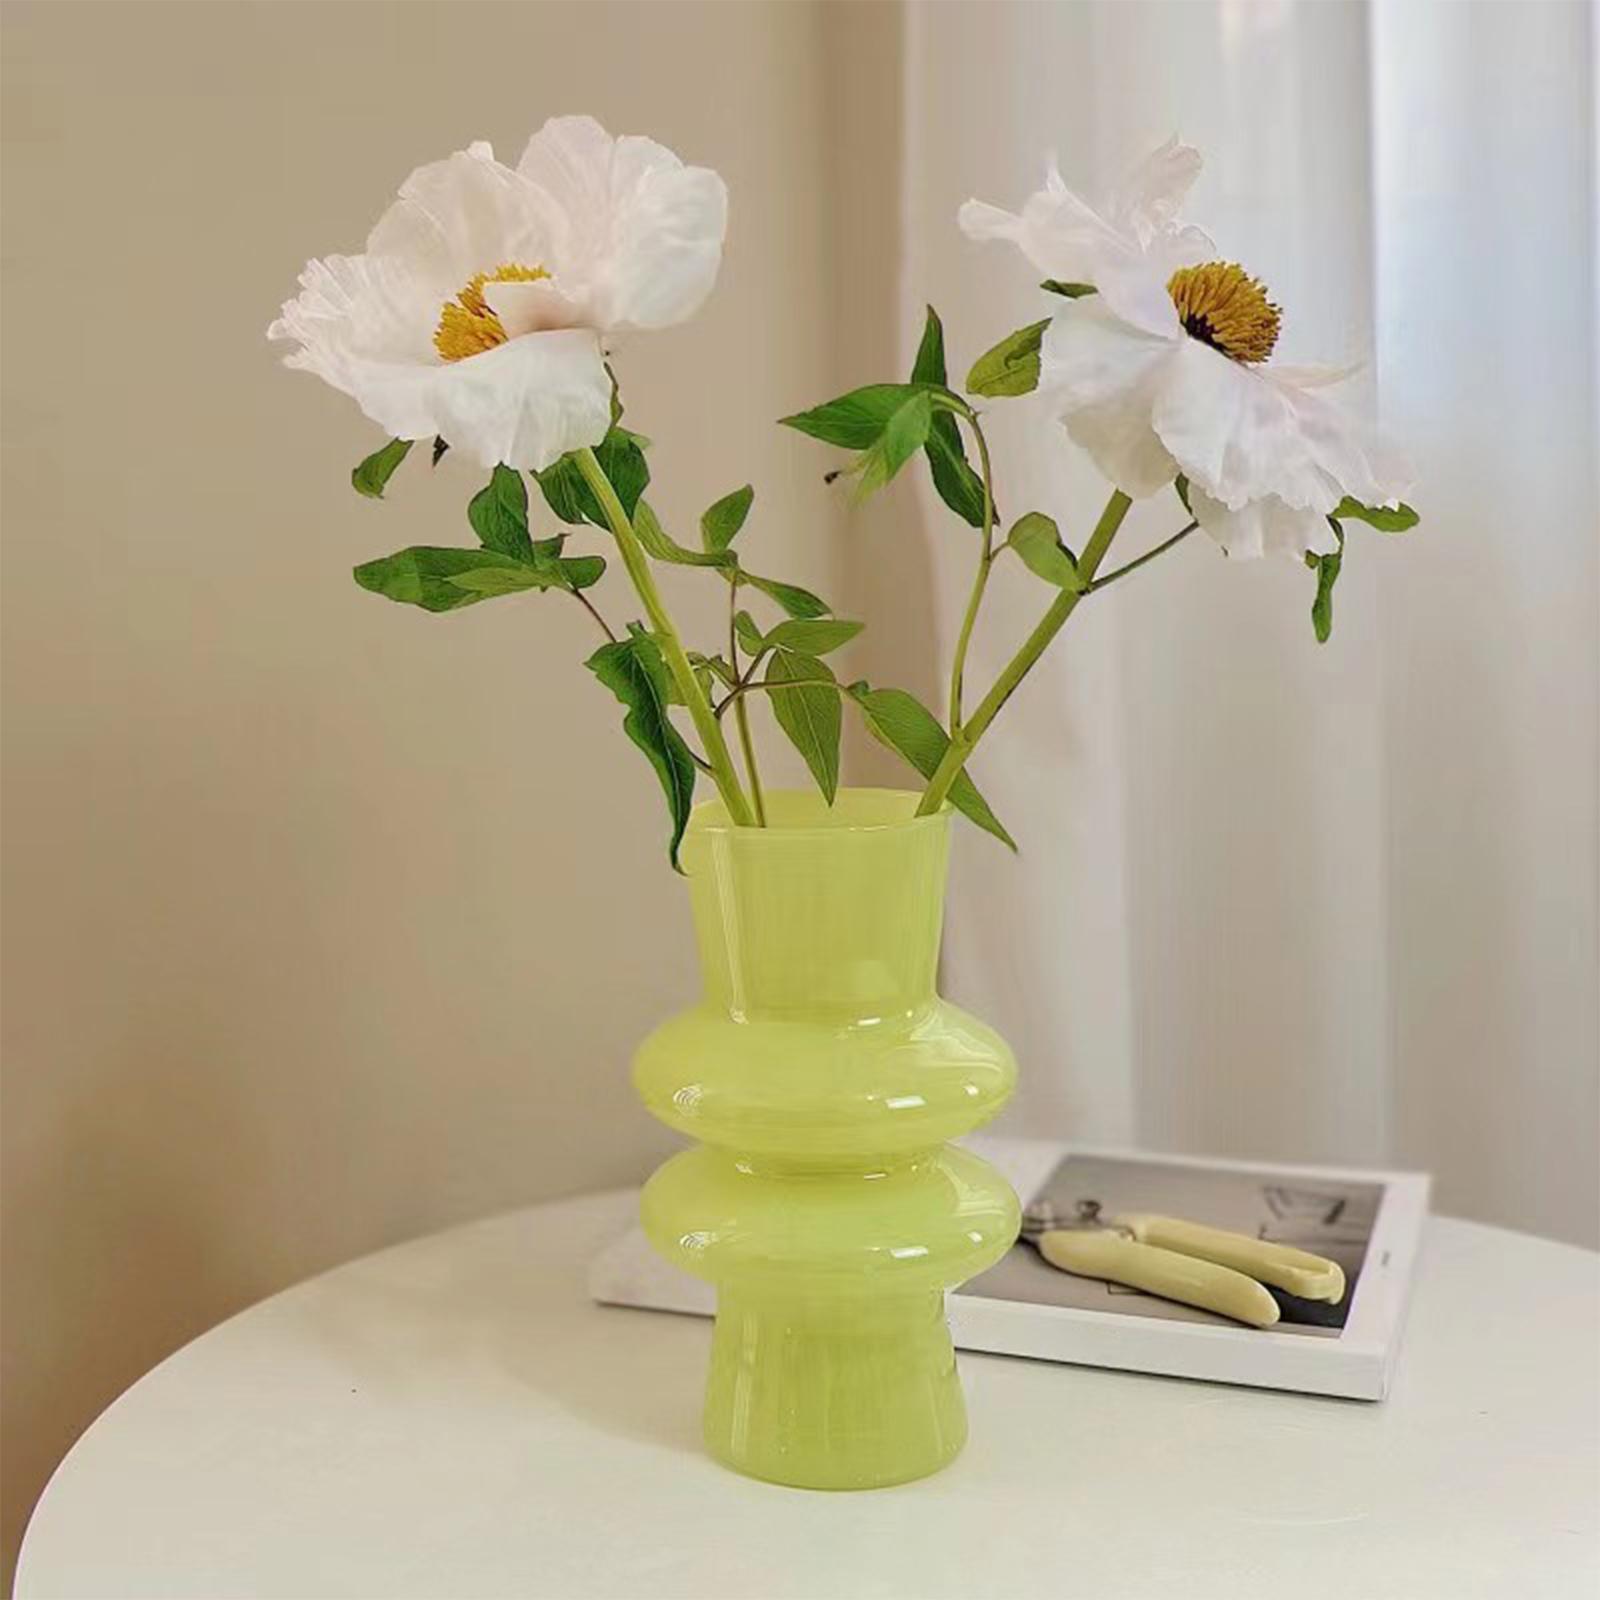 Flower Vase Modern Vase Unique Glass Bottle Flower Vase Modern Vase Decorative Vase Flowers Holder for Bedroom Home Decor